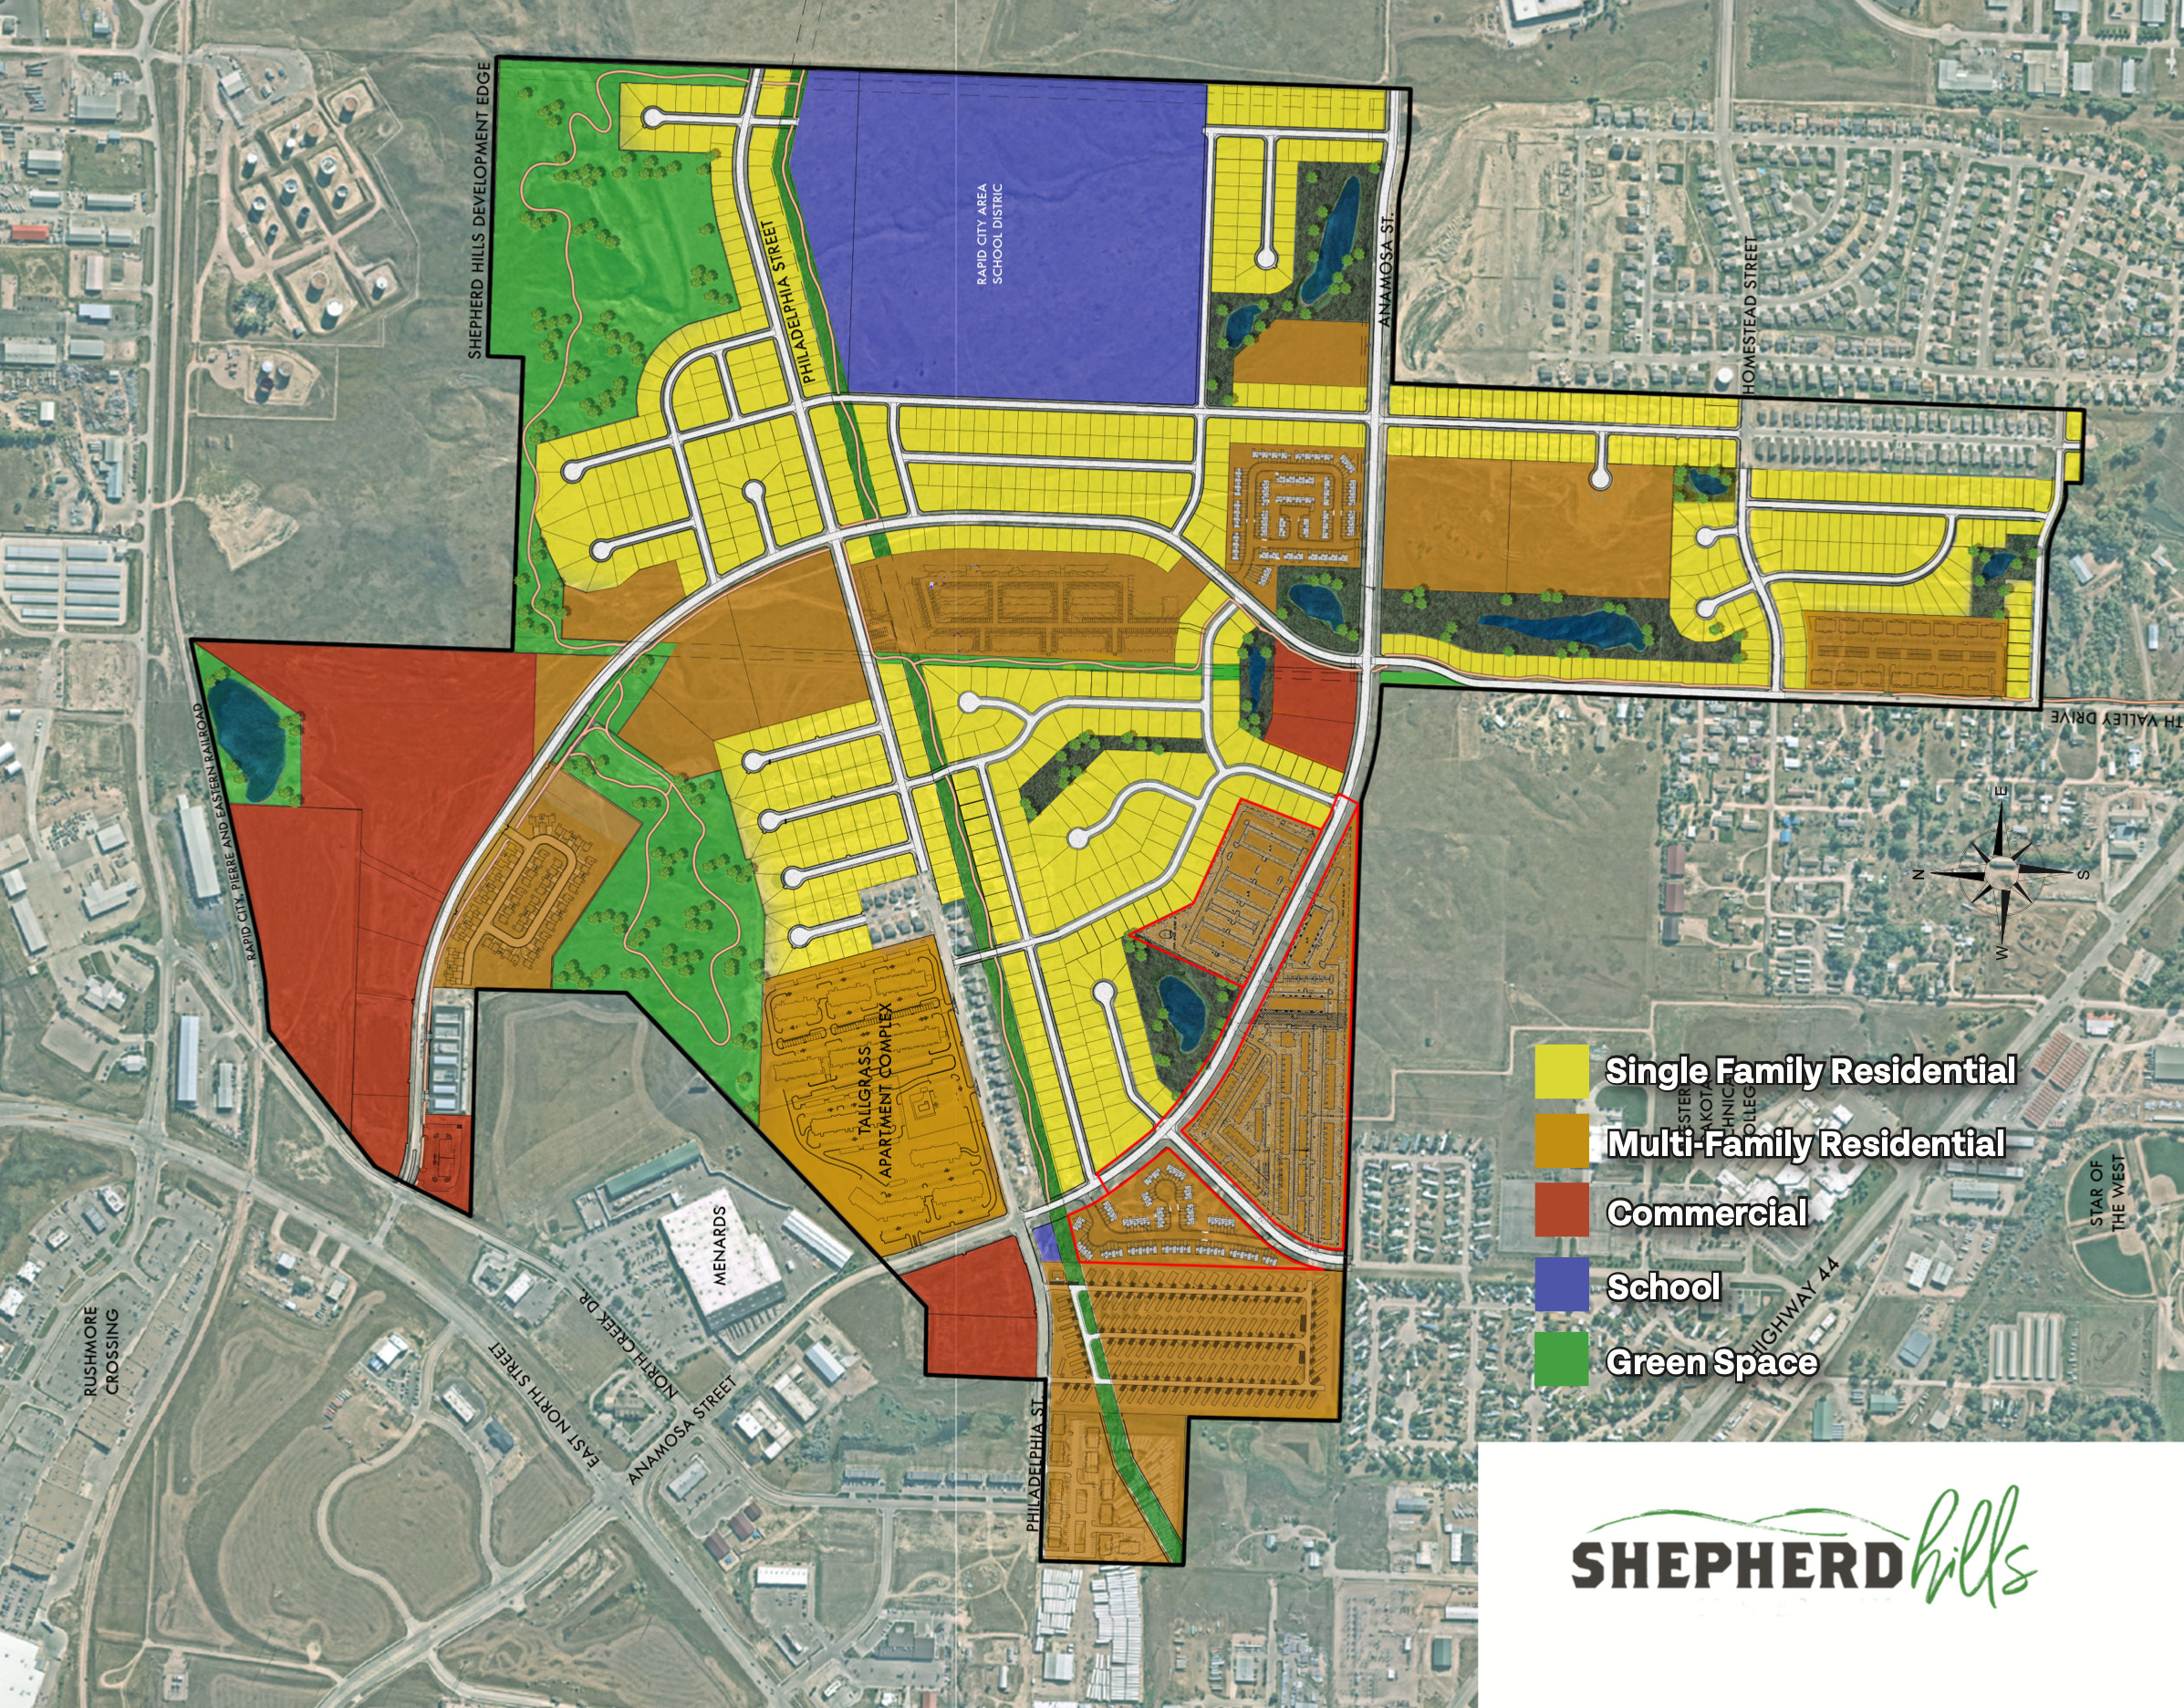 Shepherd Hills master plan in Rapid City South Dakota